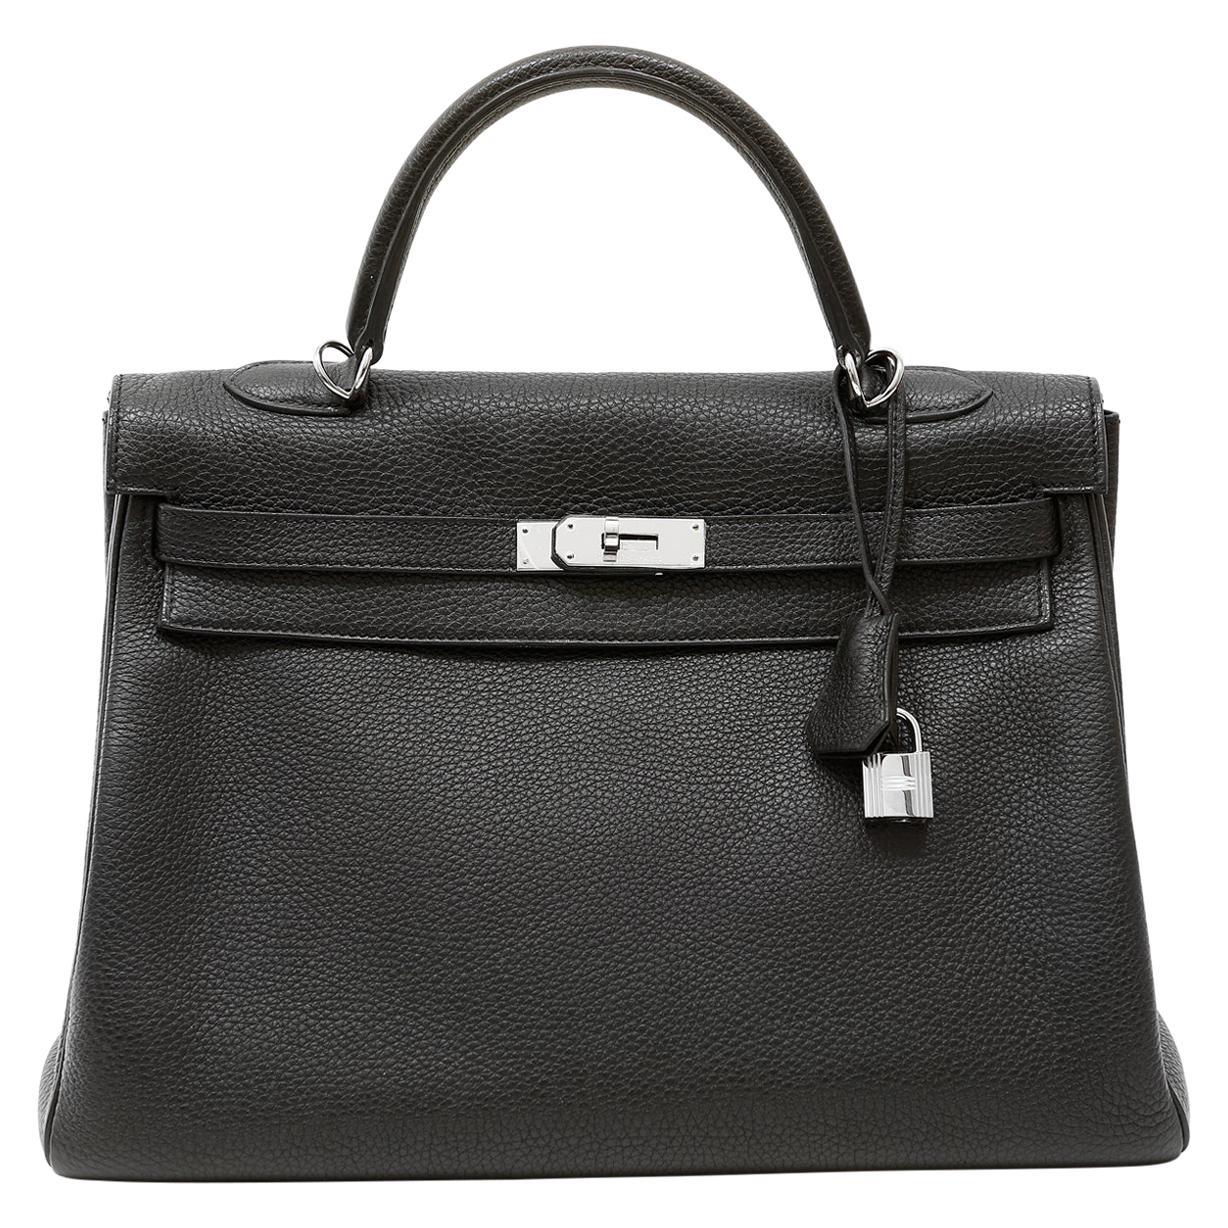 Hermès Black Togo Leather 35 cm Kelly Bag with Palladium